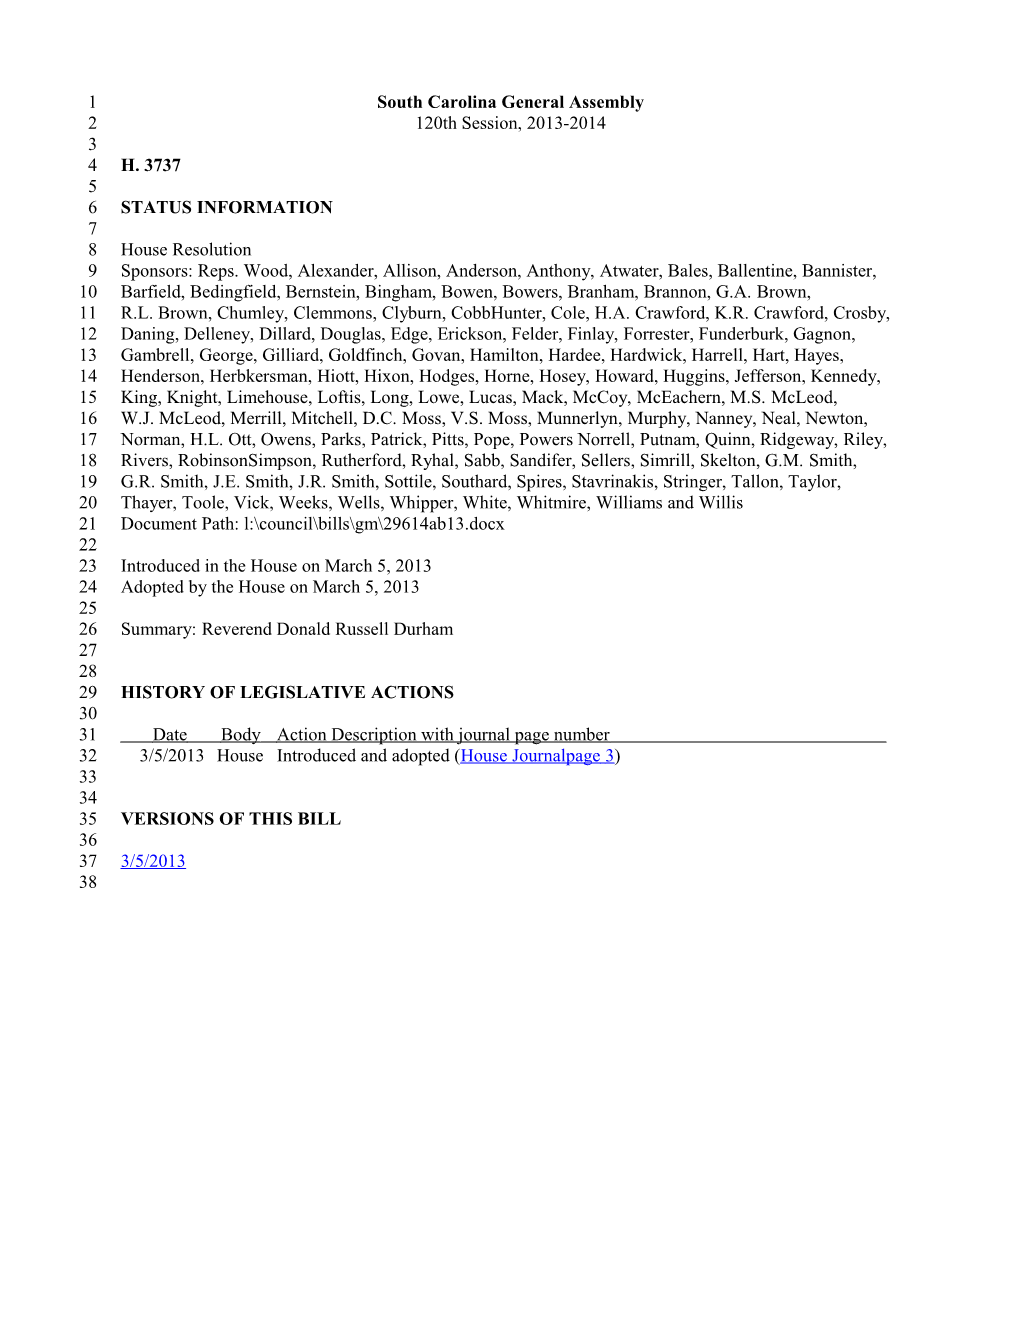 2013-2014 Bill 3737: Reverend Donald Russell Durham - South Carolina Legislature Online